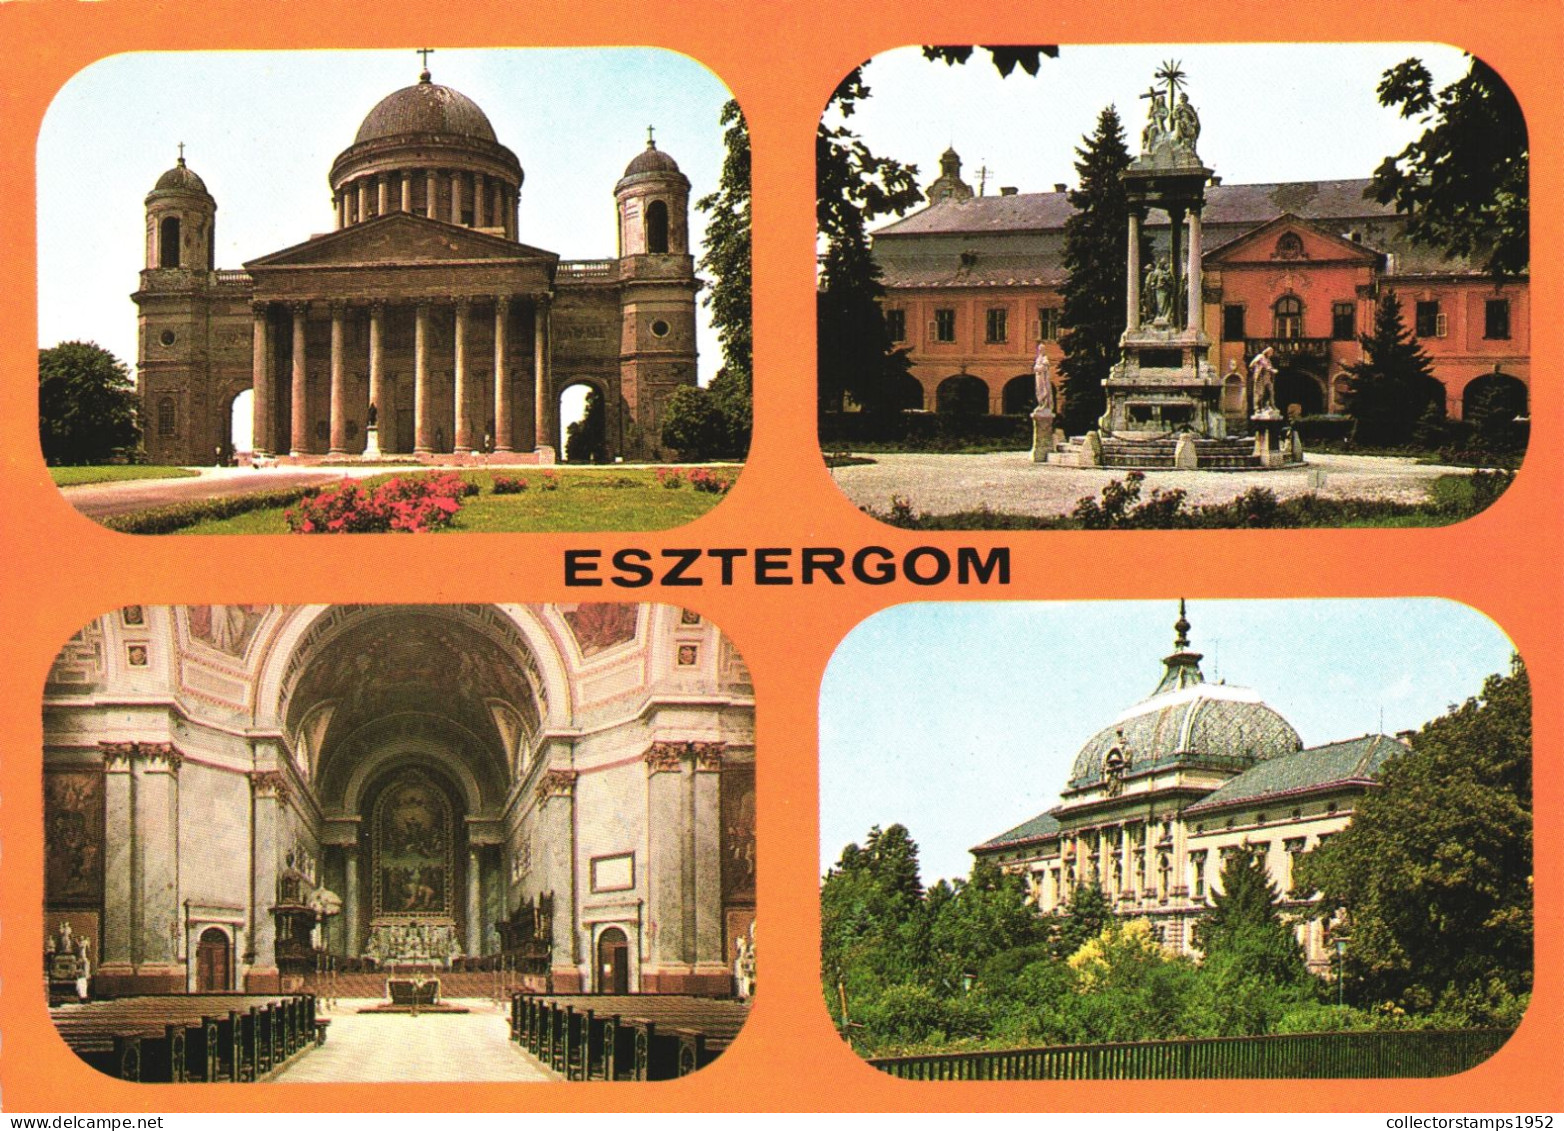 ESZTERGOM, MULTIPLE VIEWS, ARCHITECTURE, GARDEN, CHURCH, STATUE, HUNGARY, POSTCARD - Hungary